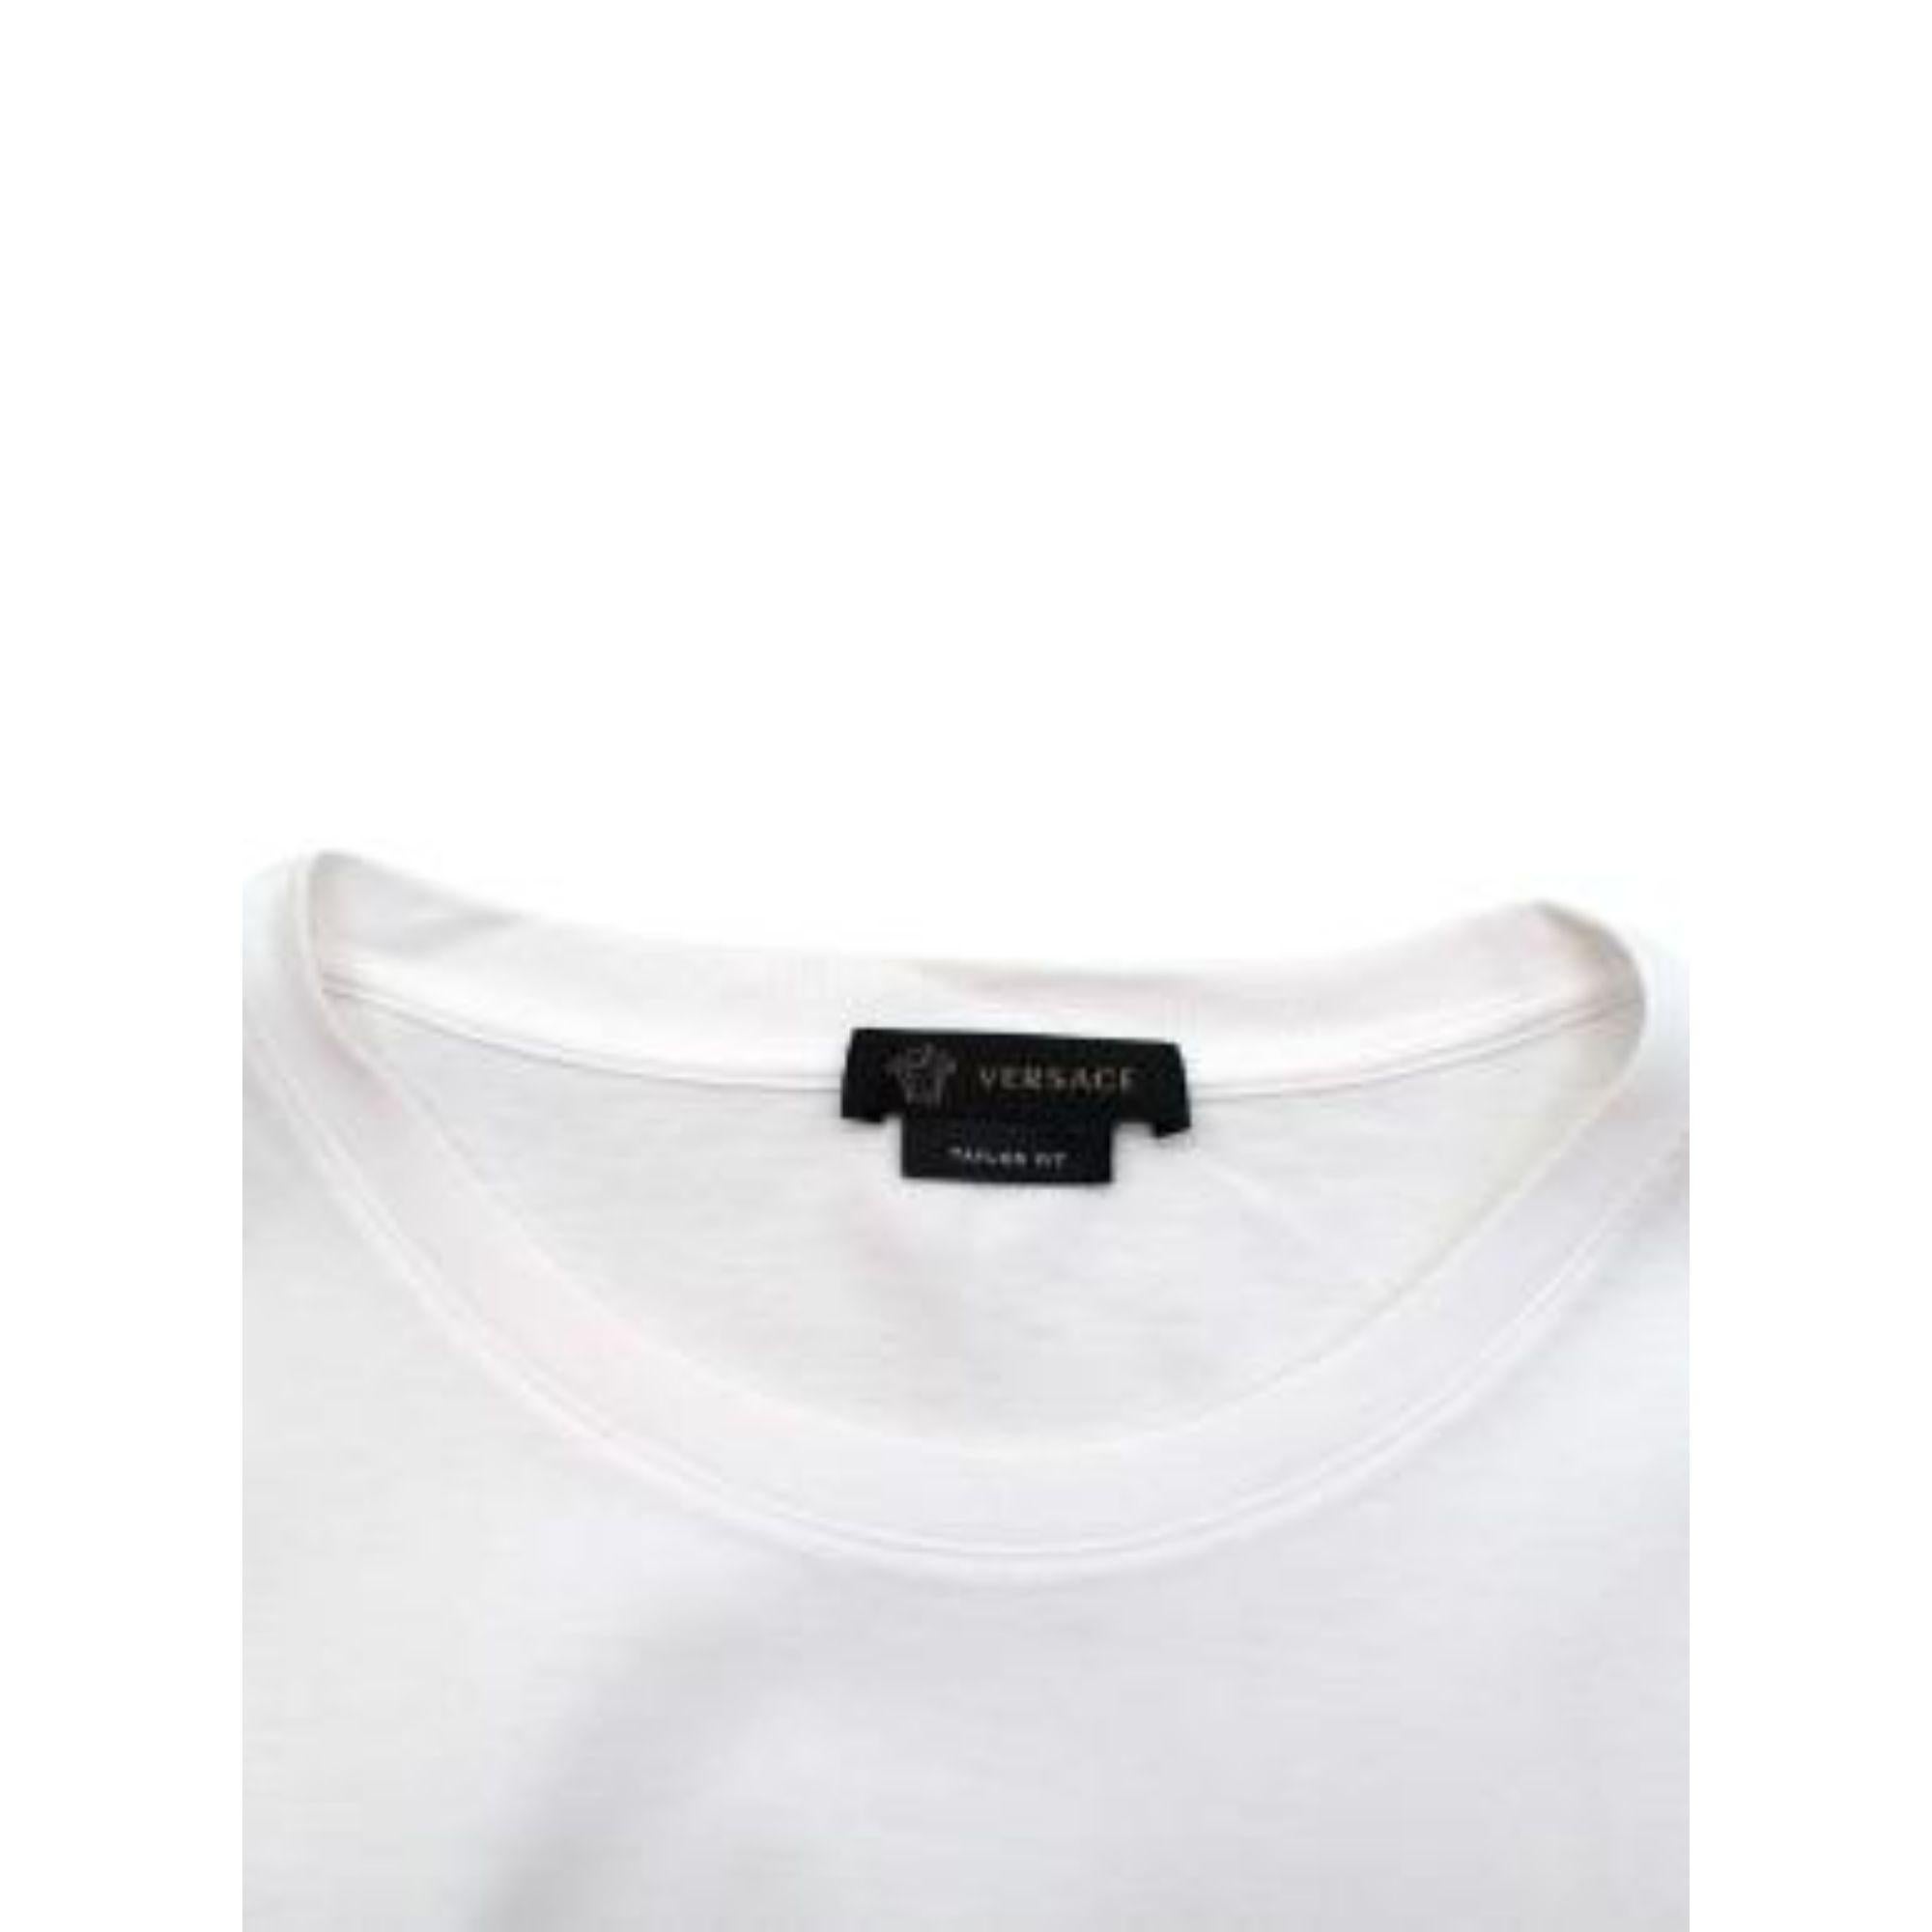 Versace White Sunglasses Print T-shirt For Sale 1